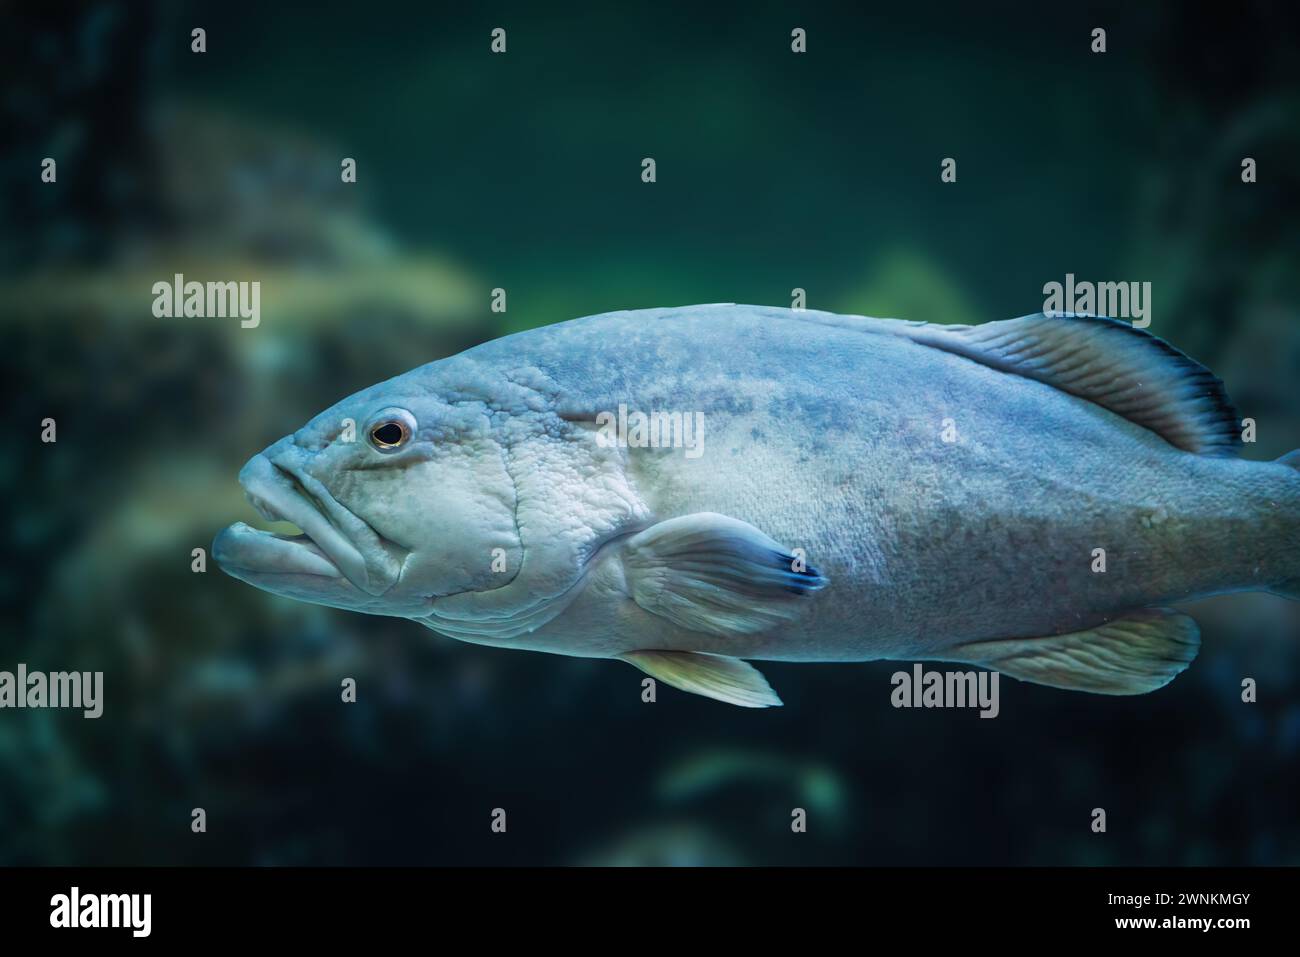 Gag Grouper fish (Mycteroperca microlepis) Stock Photo